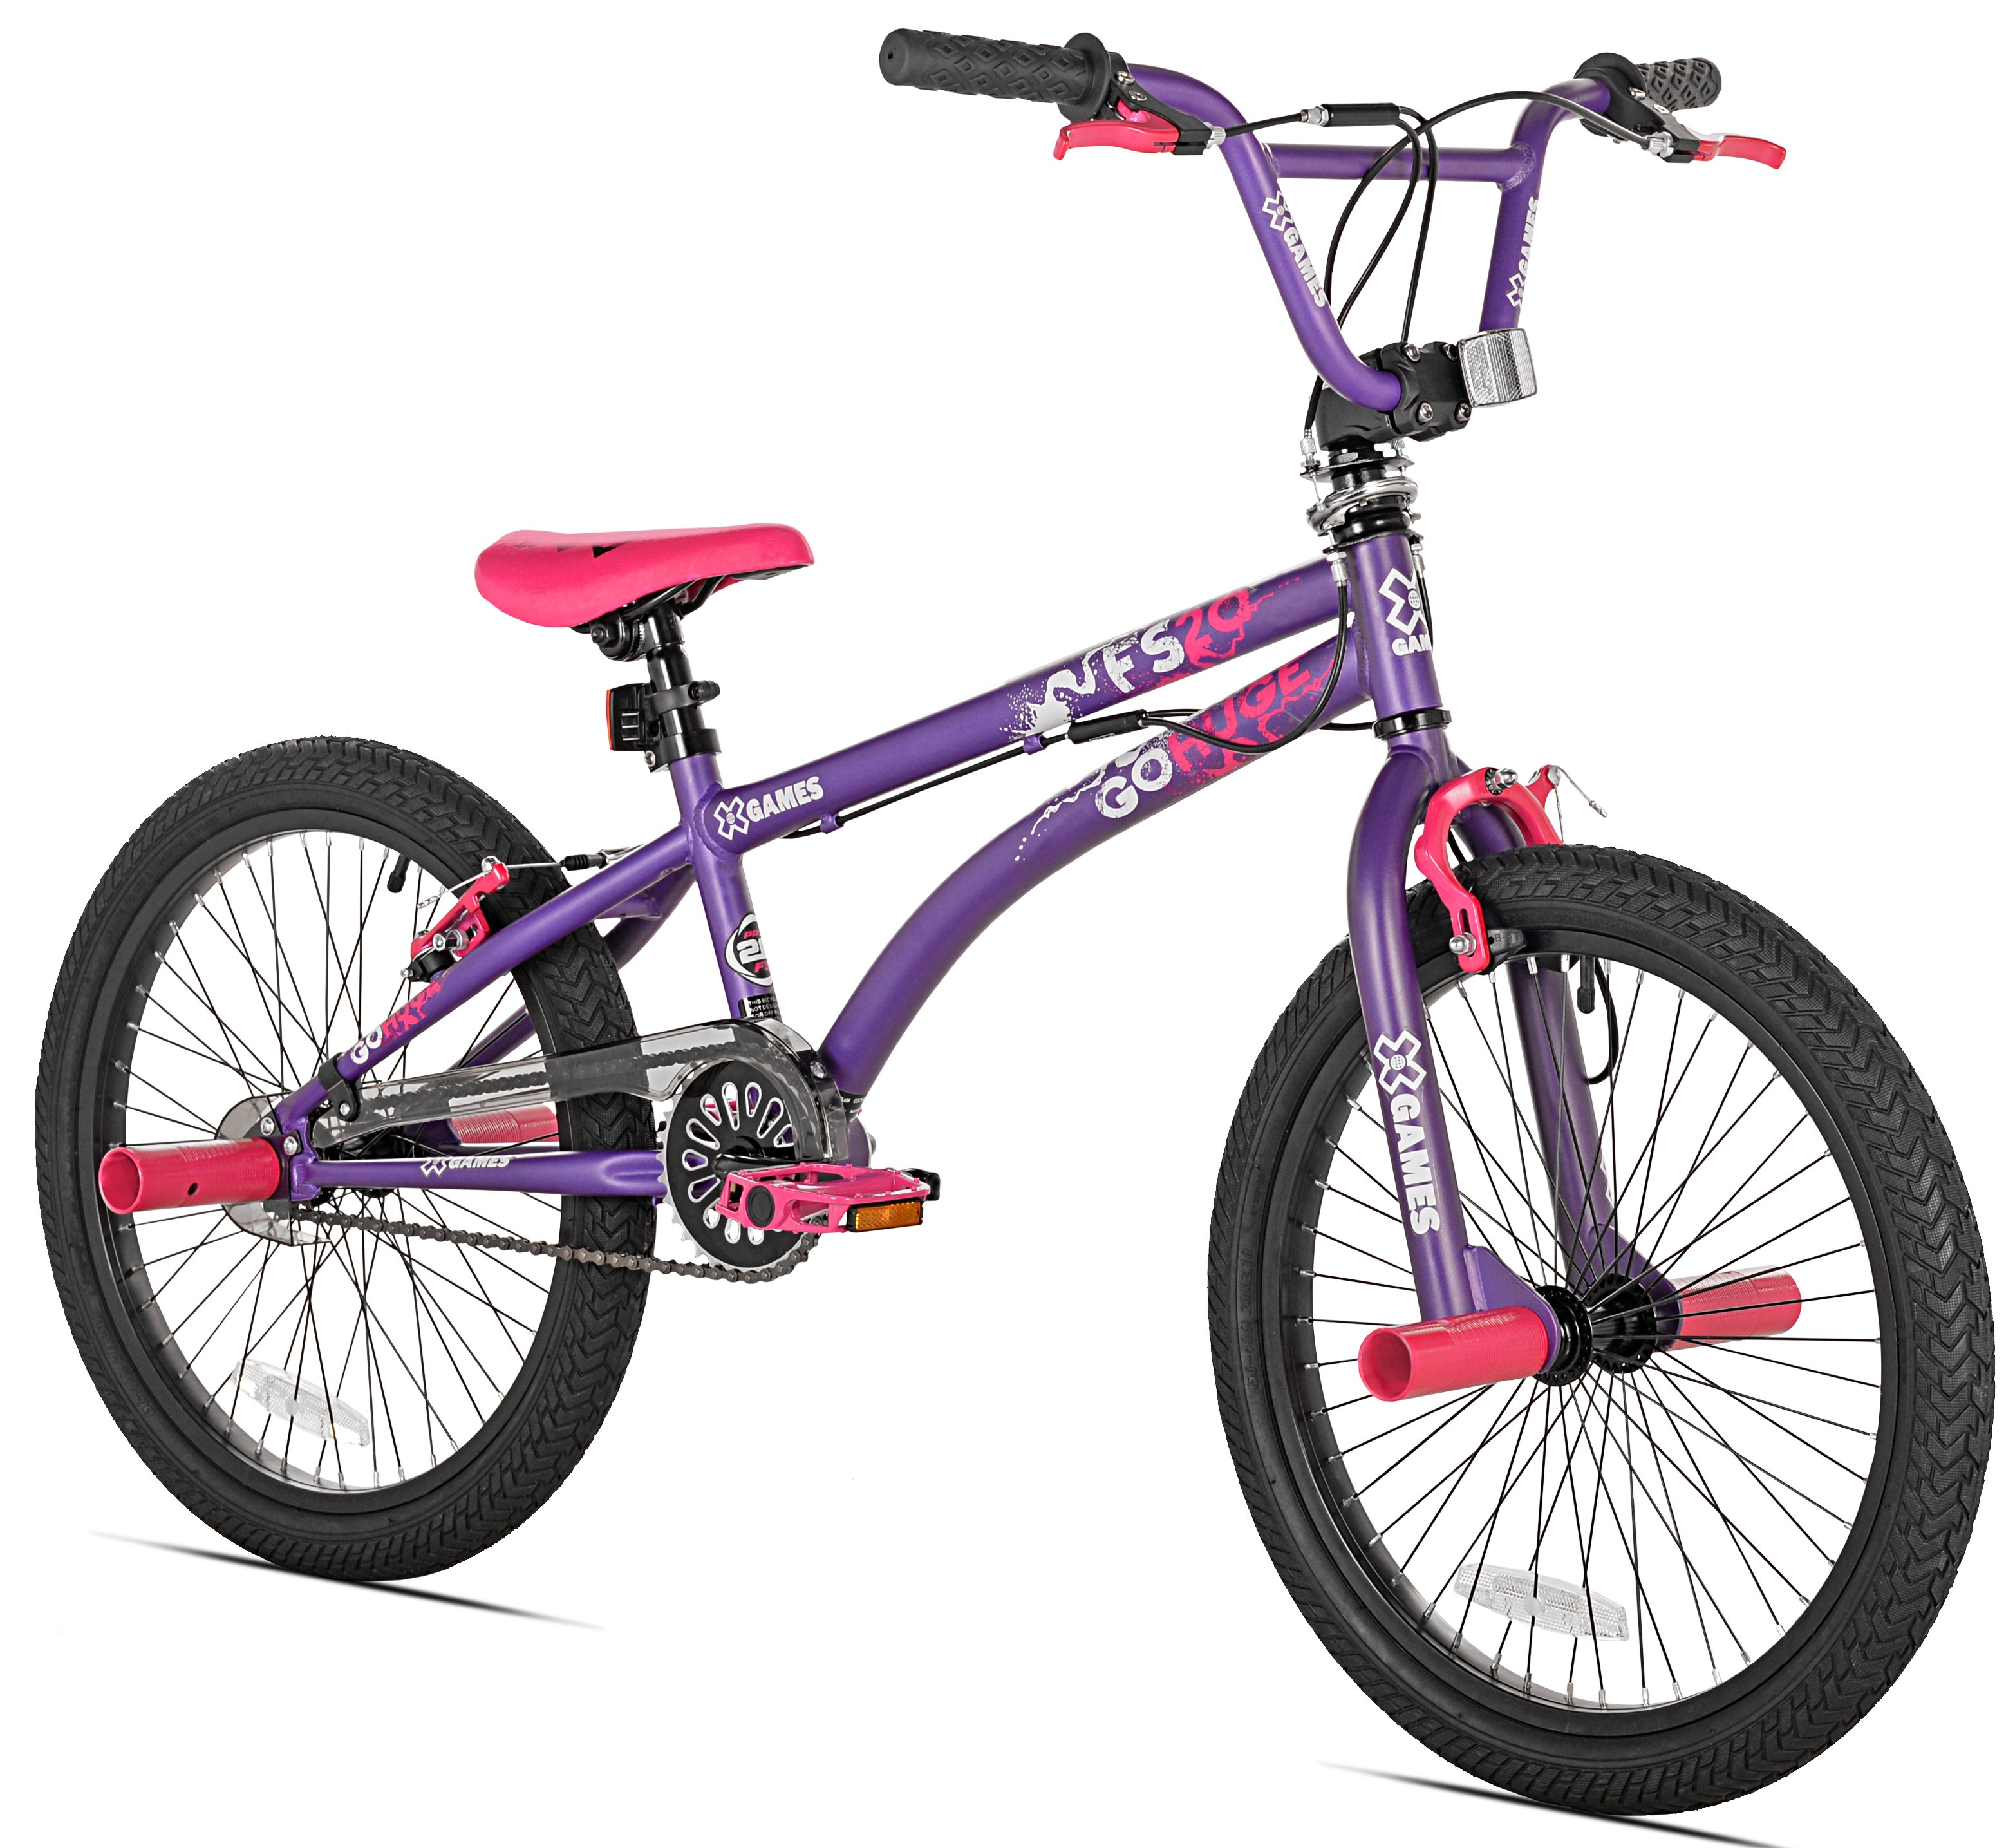 Kent X Games 20 FS20 Girls BMX Bicycle